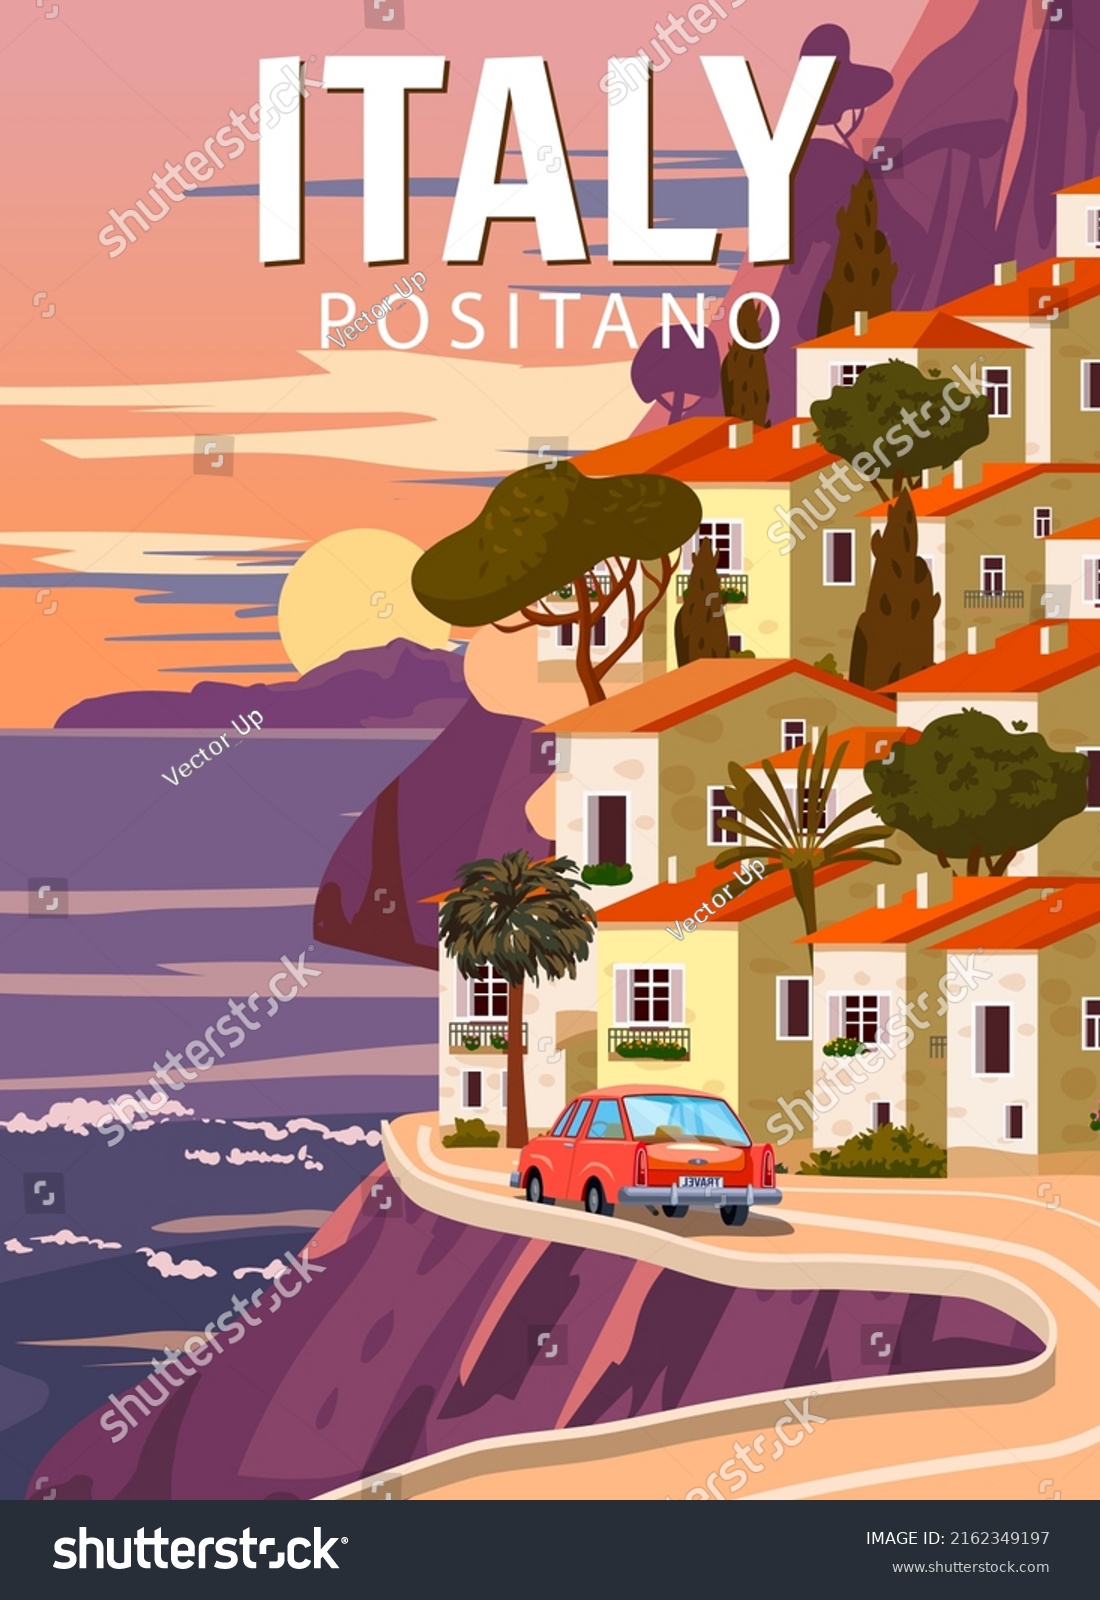 SVG of Retro Poster Italy, mediterranean romantic landscape, road, car, mountains, seaside town, sailboat, sea. Retro travel poster svg